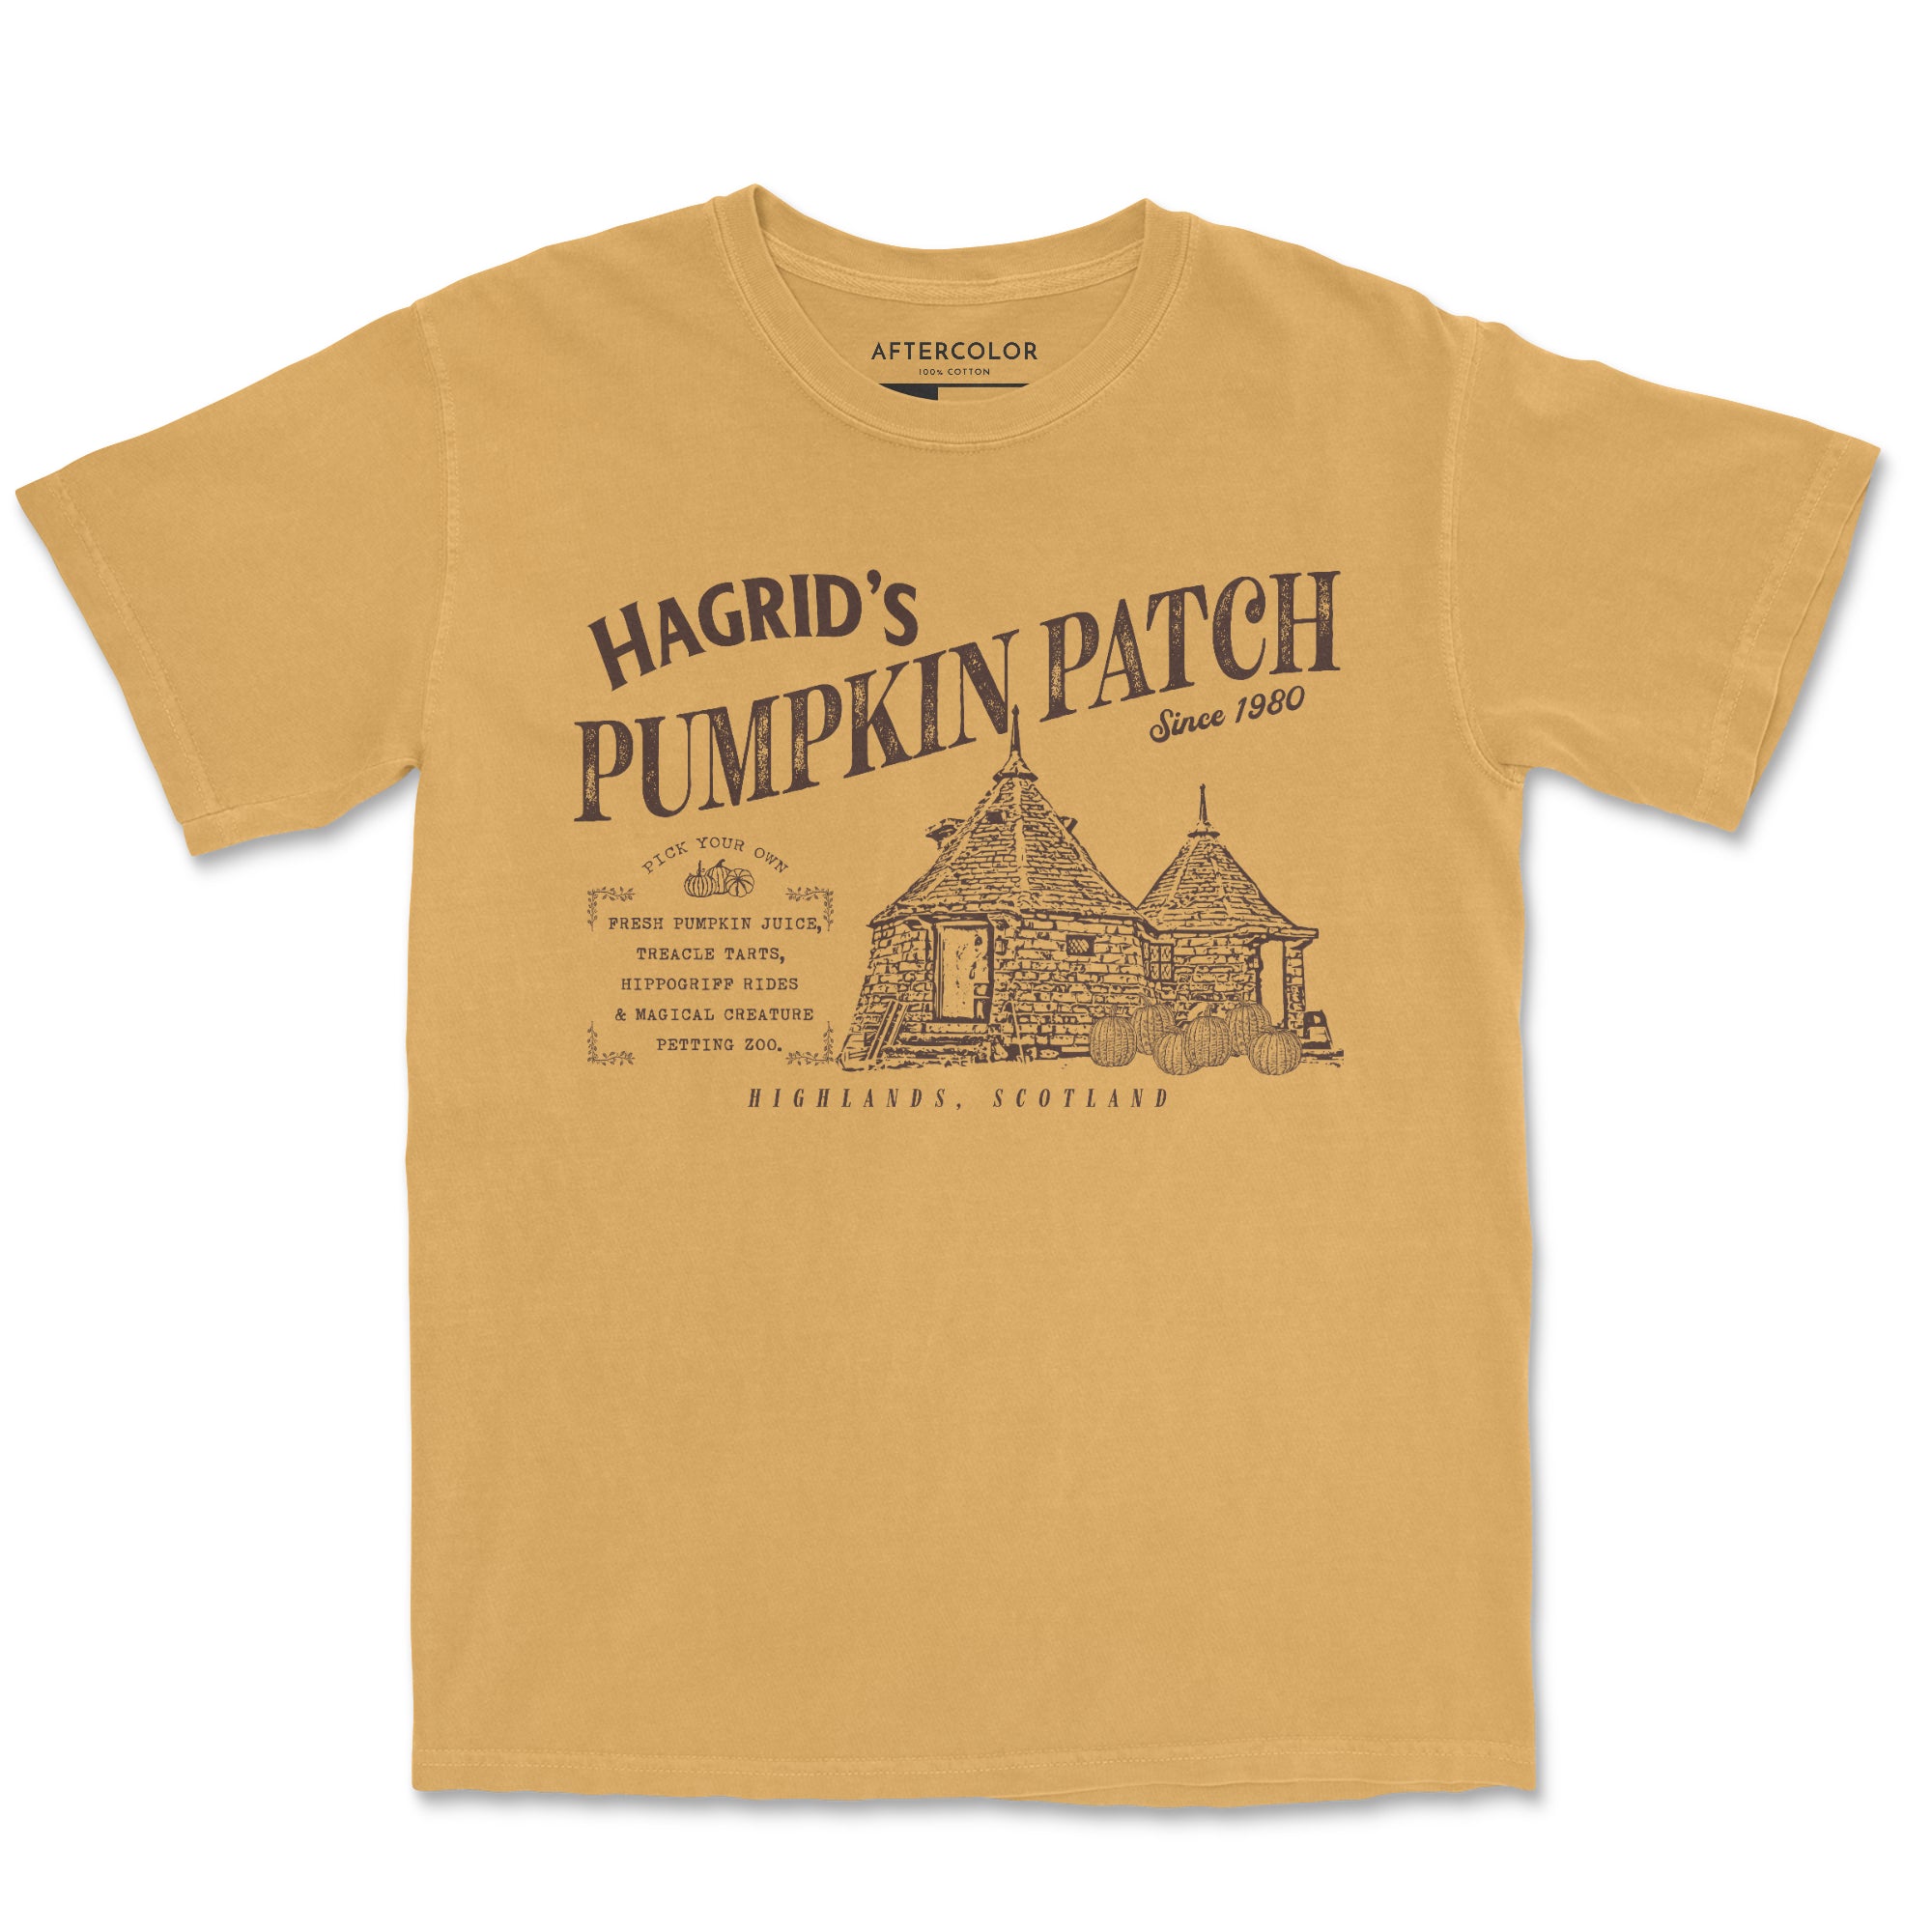 Hagrid's Pumpkin Patch Garment Dyed Tee